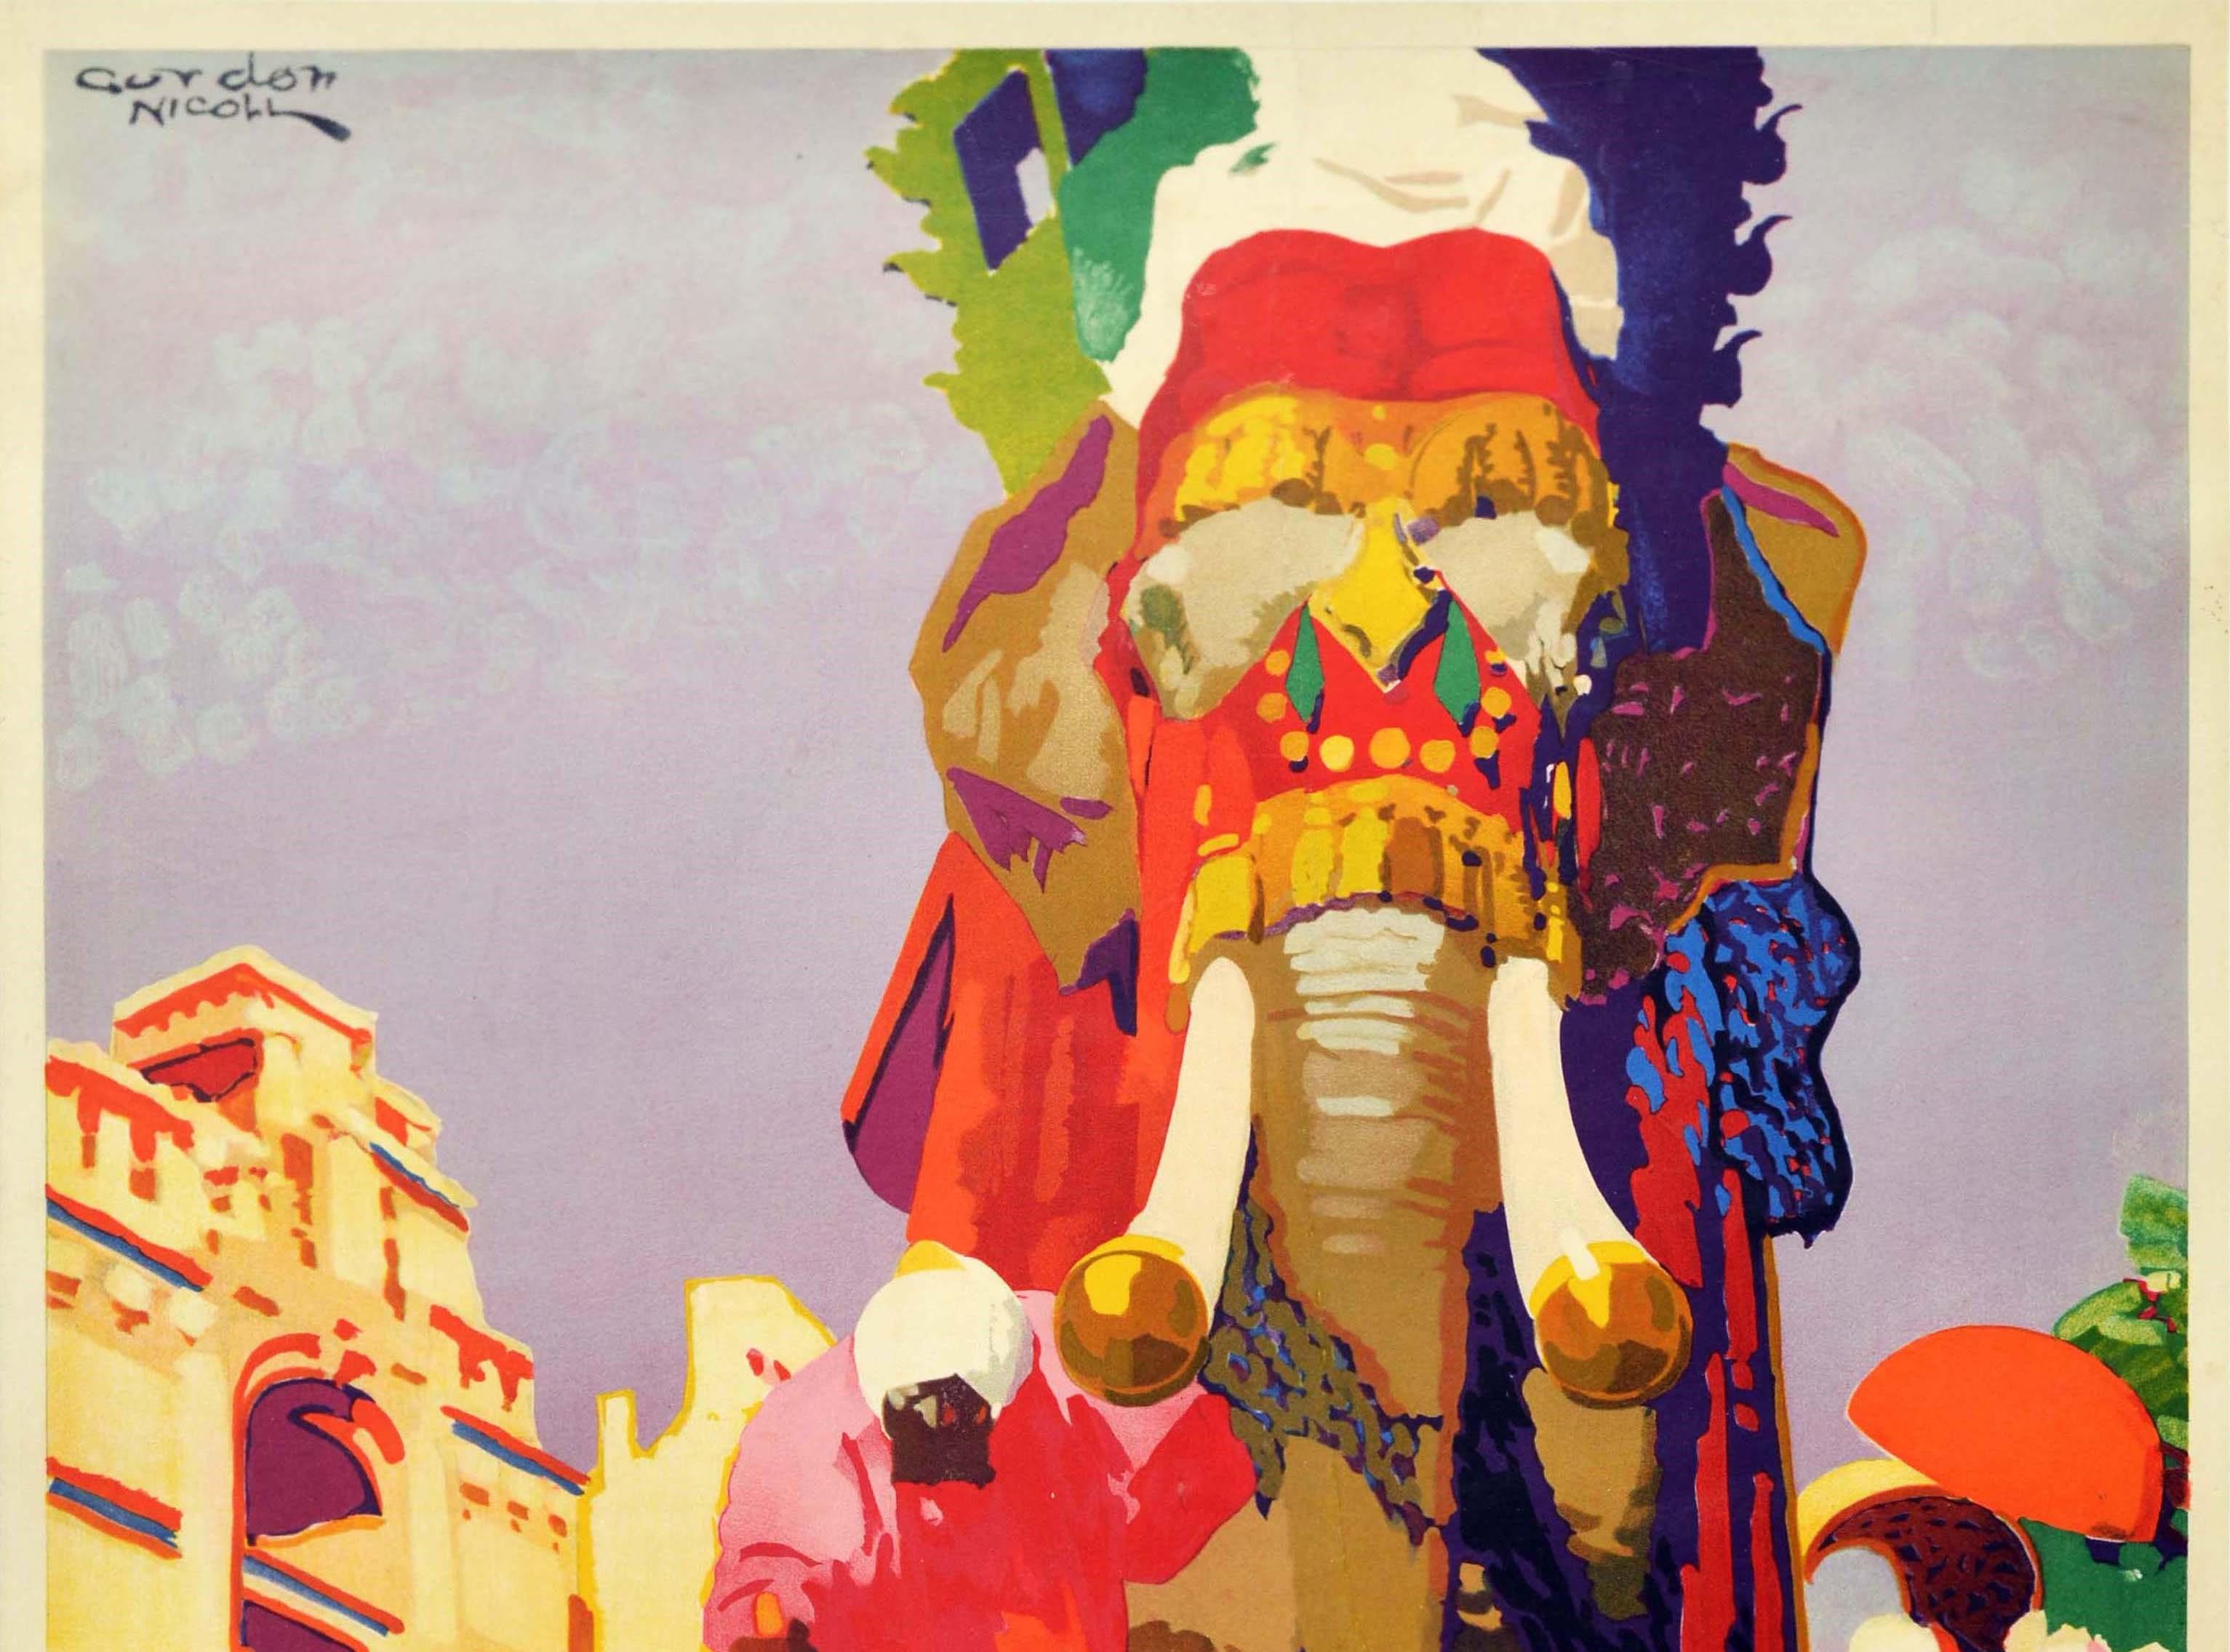 Original Vintage Cruise Travel Poster Anchor Line India Elephant Gibraltar Egypt - Print by Gordon Nicoll